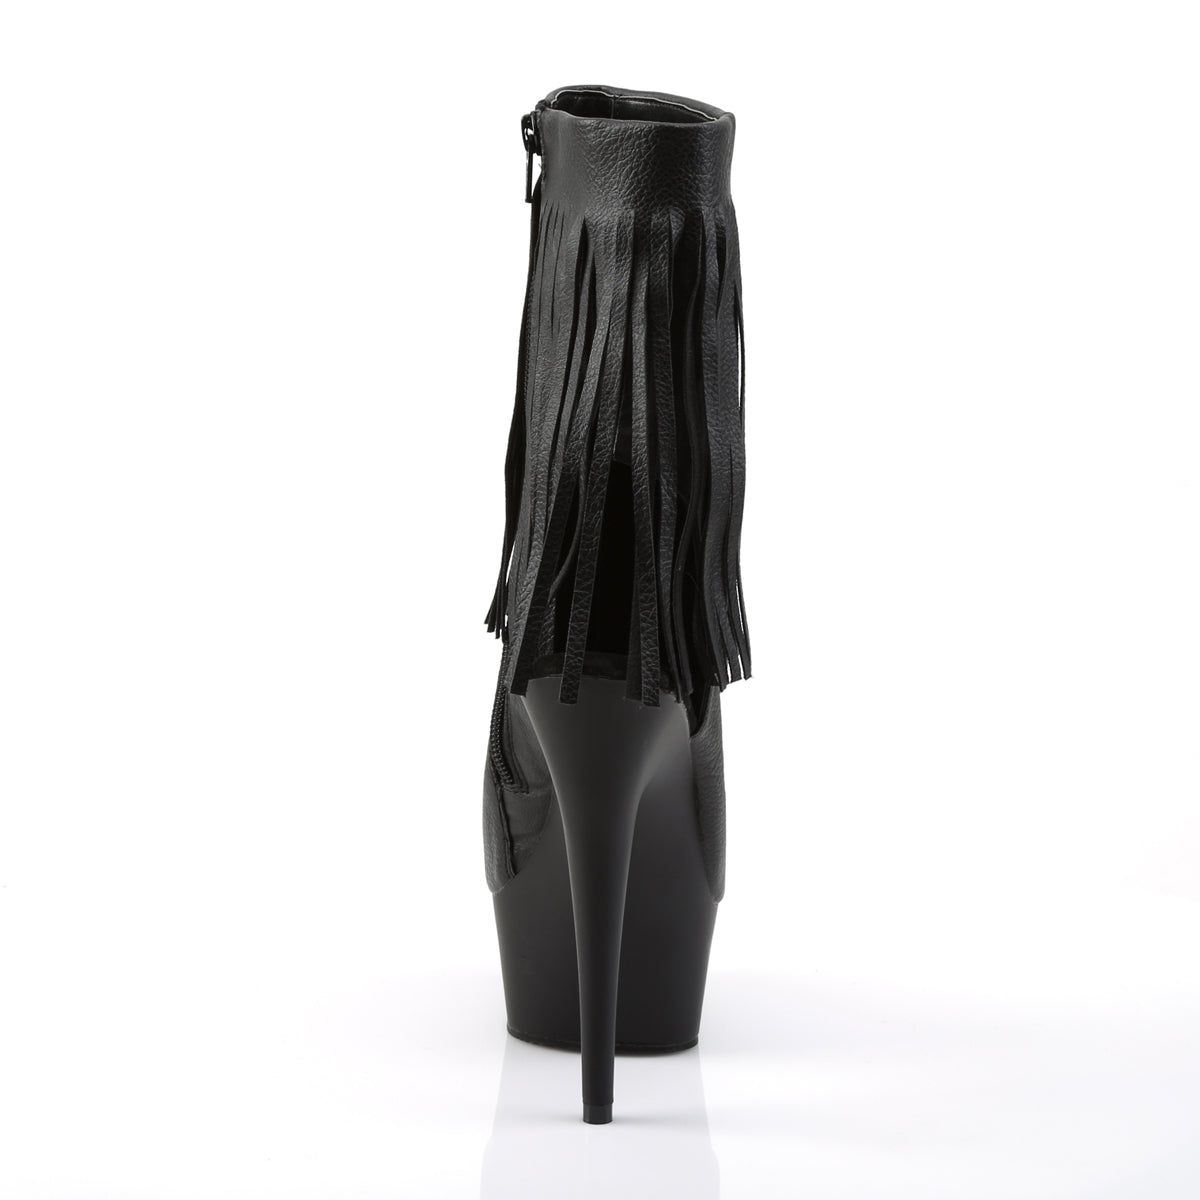 DELIGHT-1019 Pleaser 6 Inch Heel Black Pole Dancer Platforms-Pleaser- Sexy Shoes Fetish Footwear